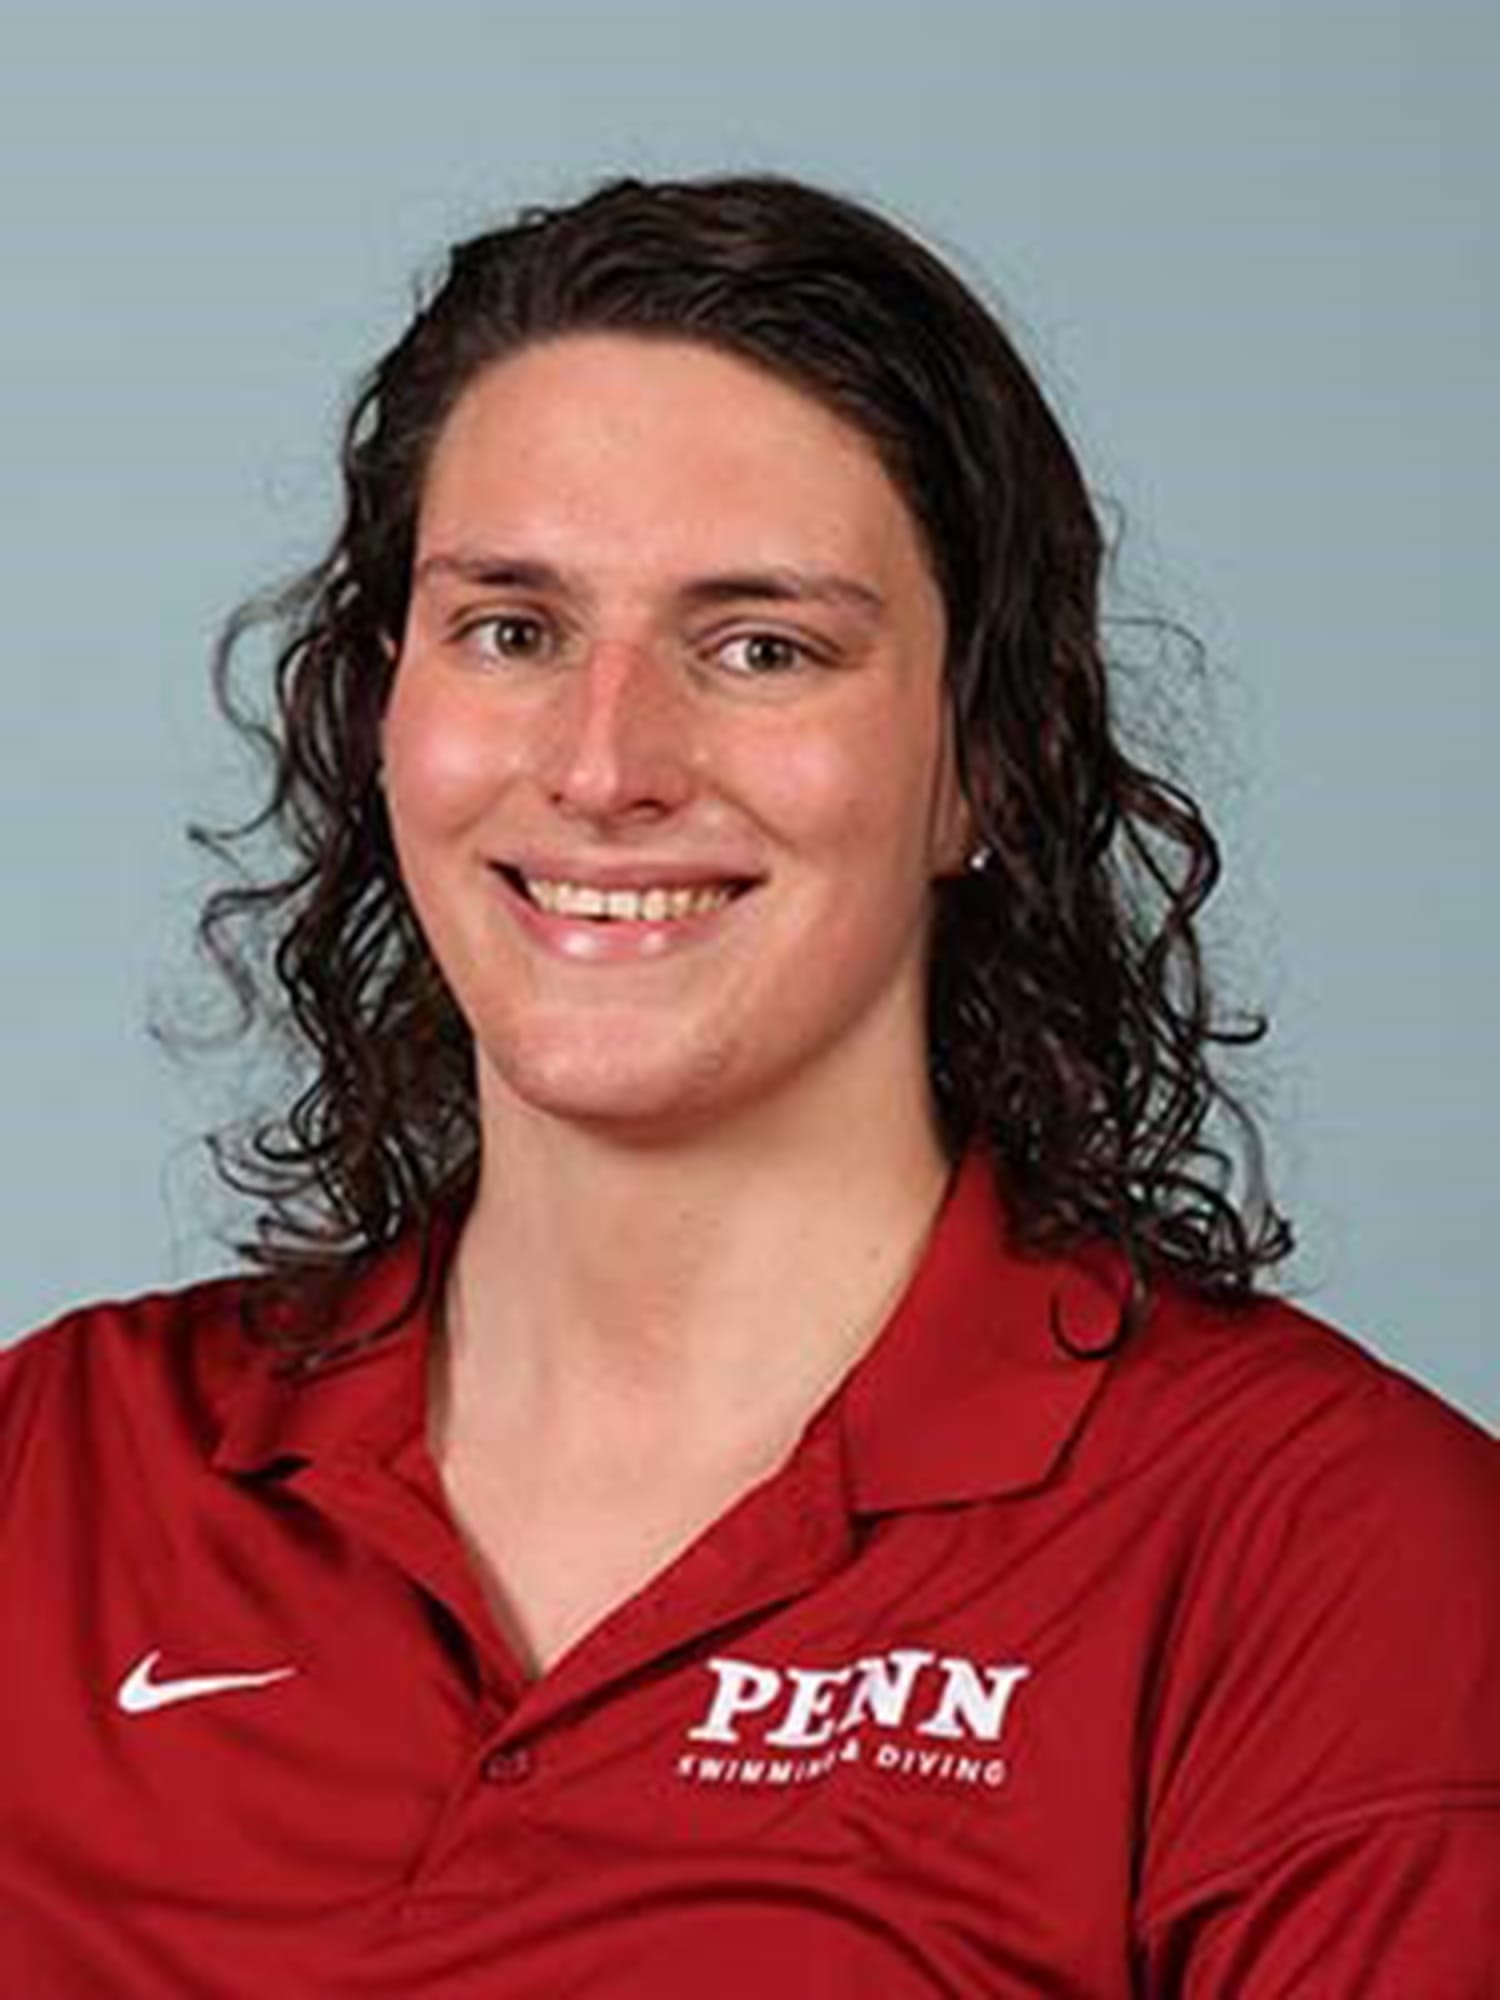 Amid trans athlete debate, Penn's Lia Thomas loses to trans Yale swimmer